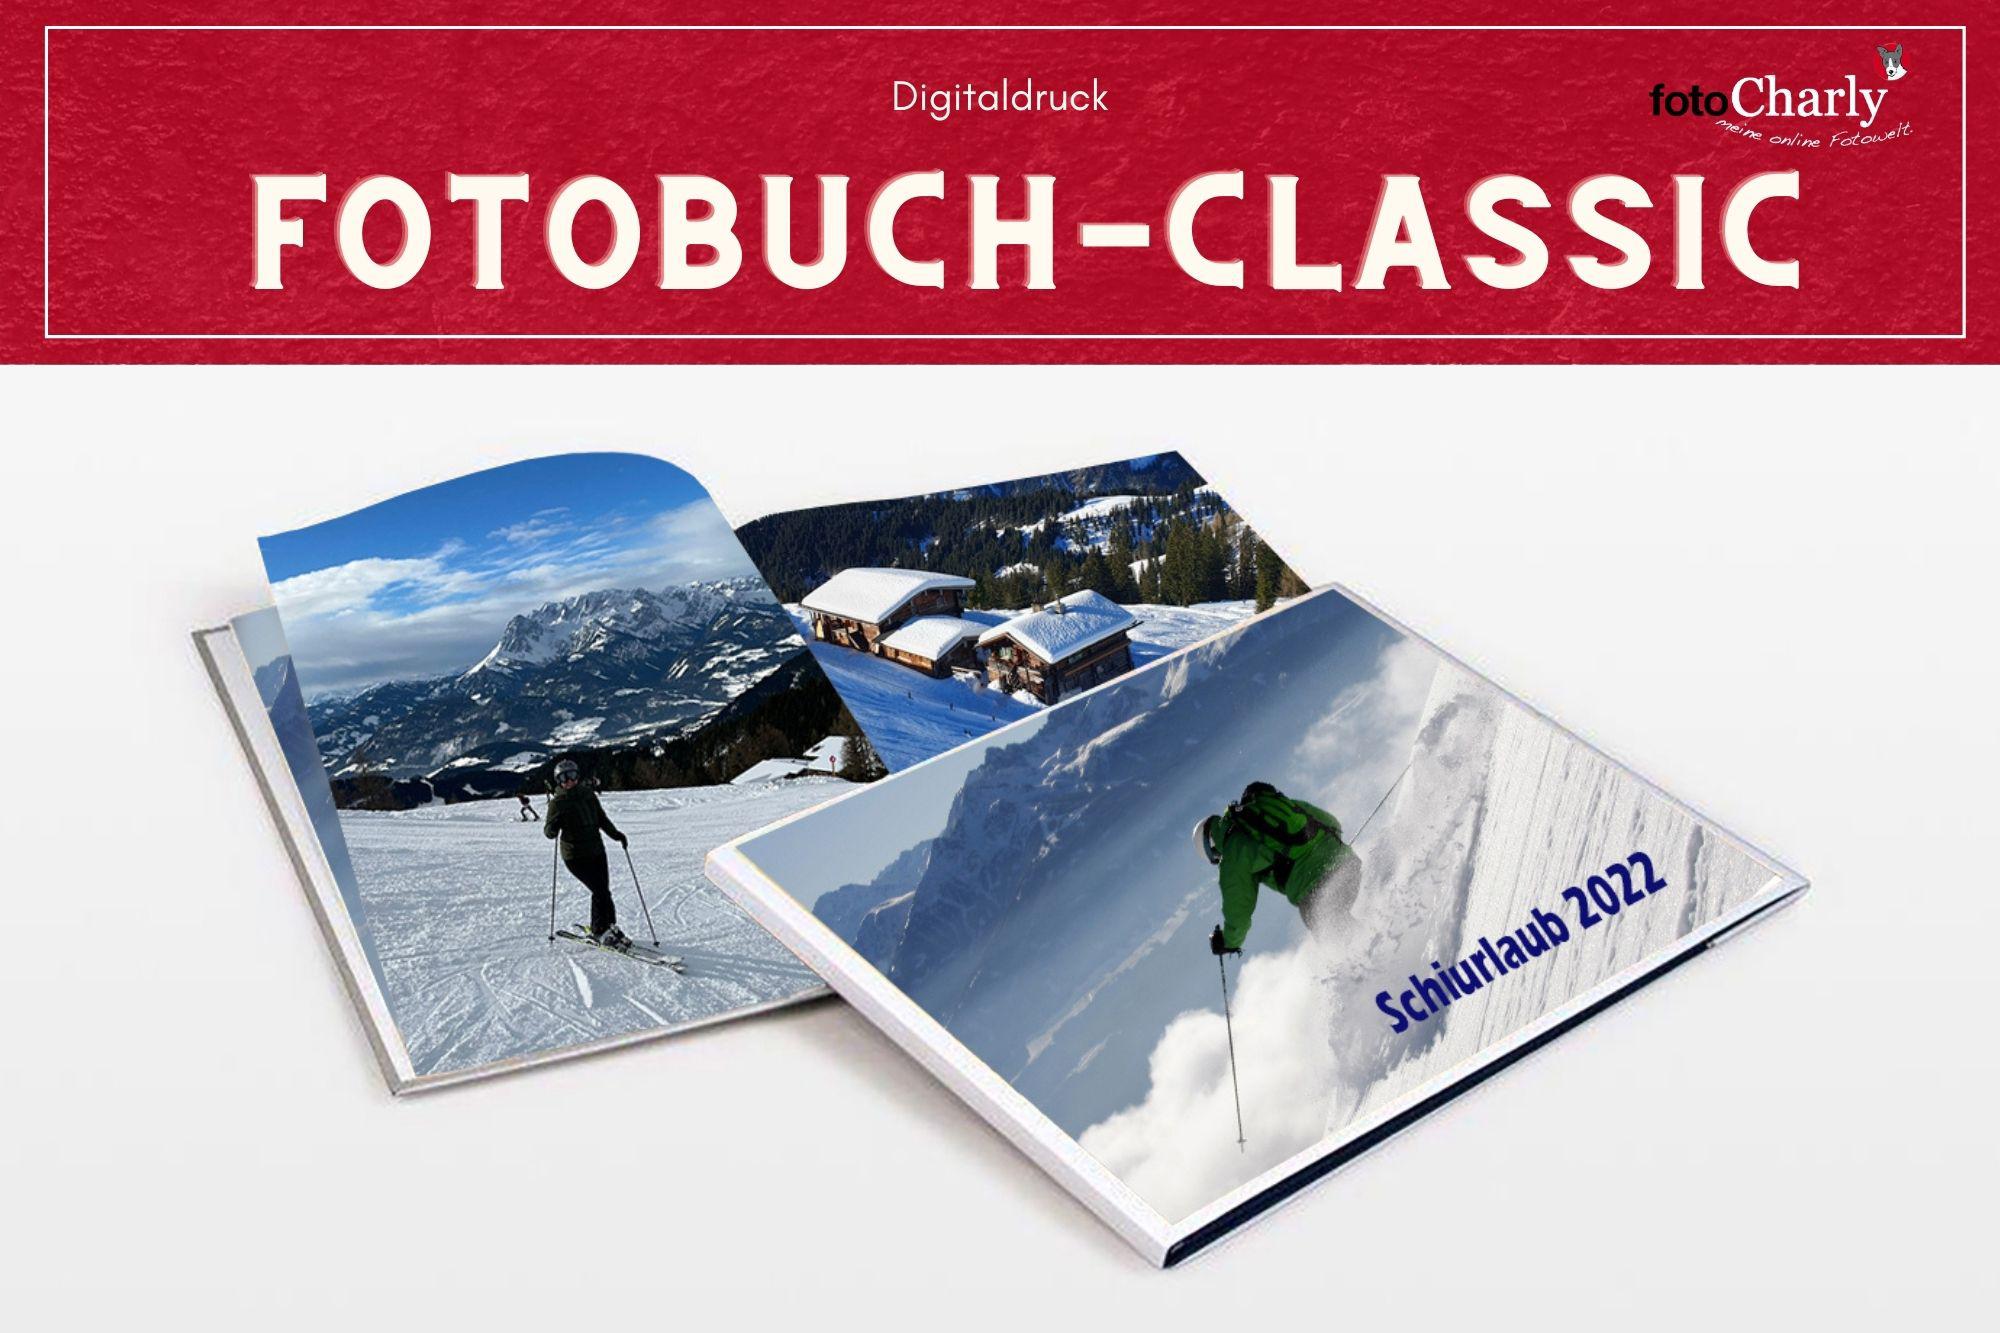 Bilder fotoCharly Fotobuch & Fotogeschenke